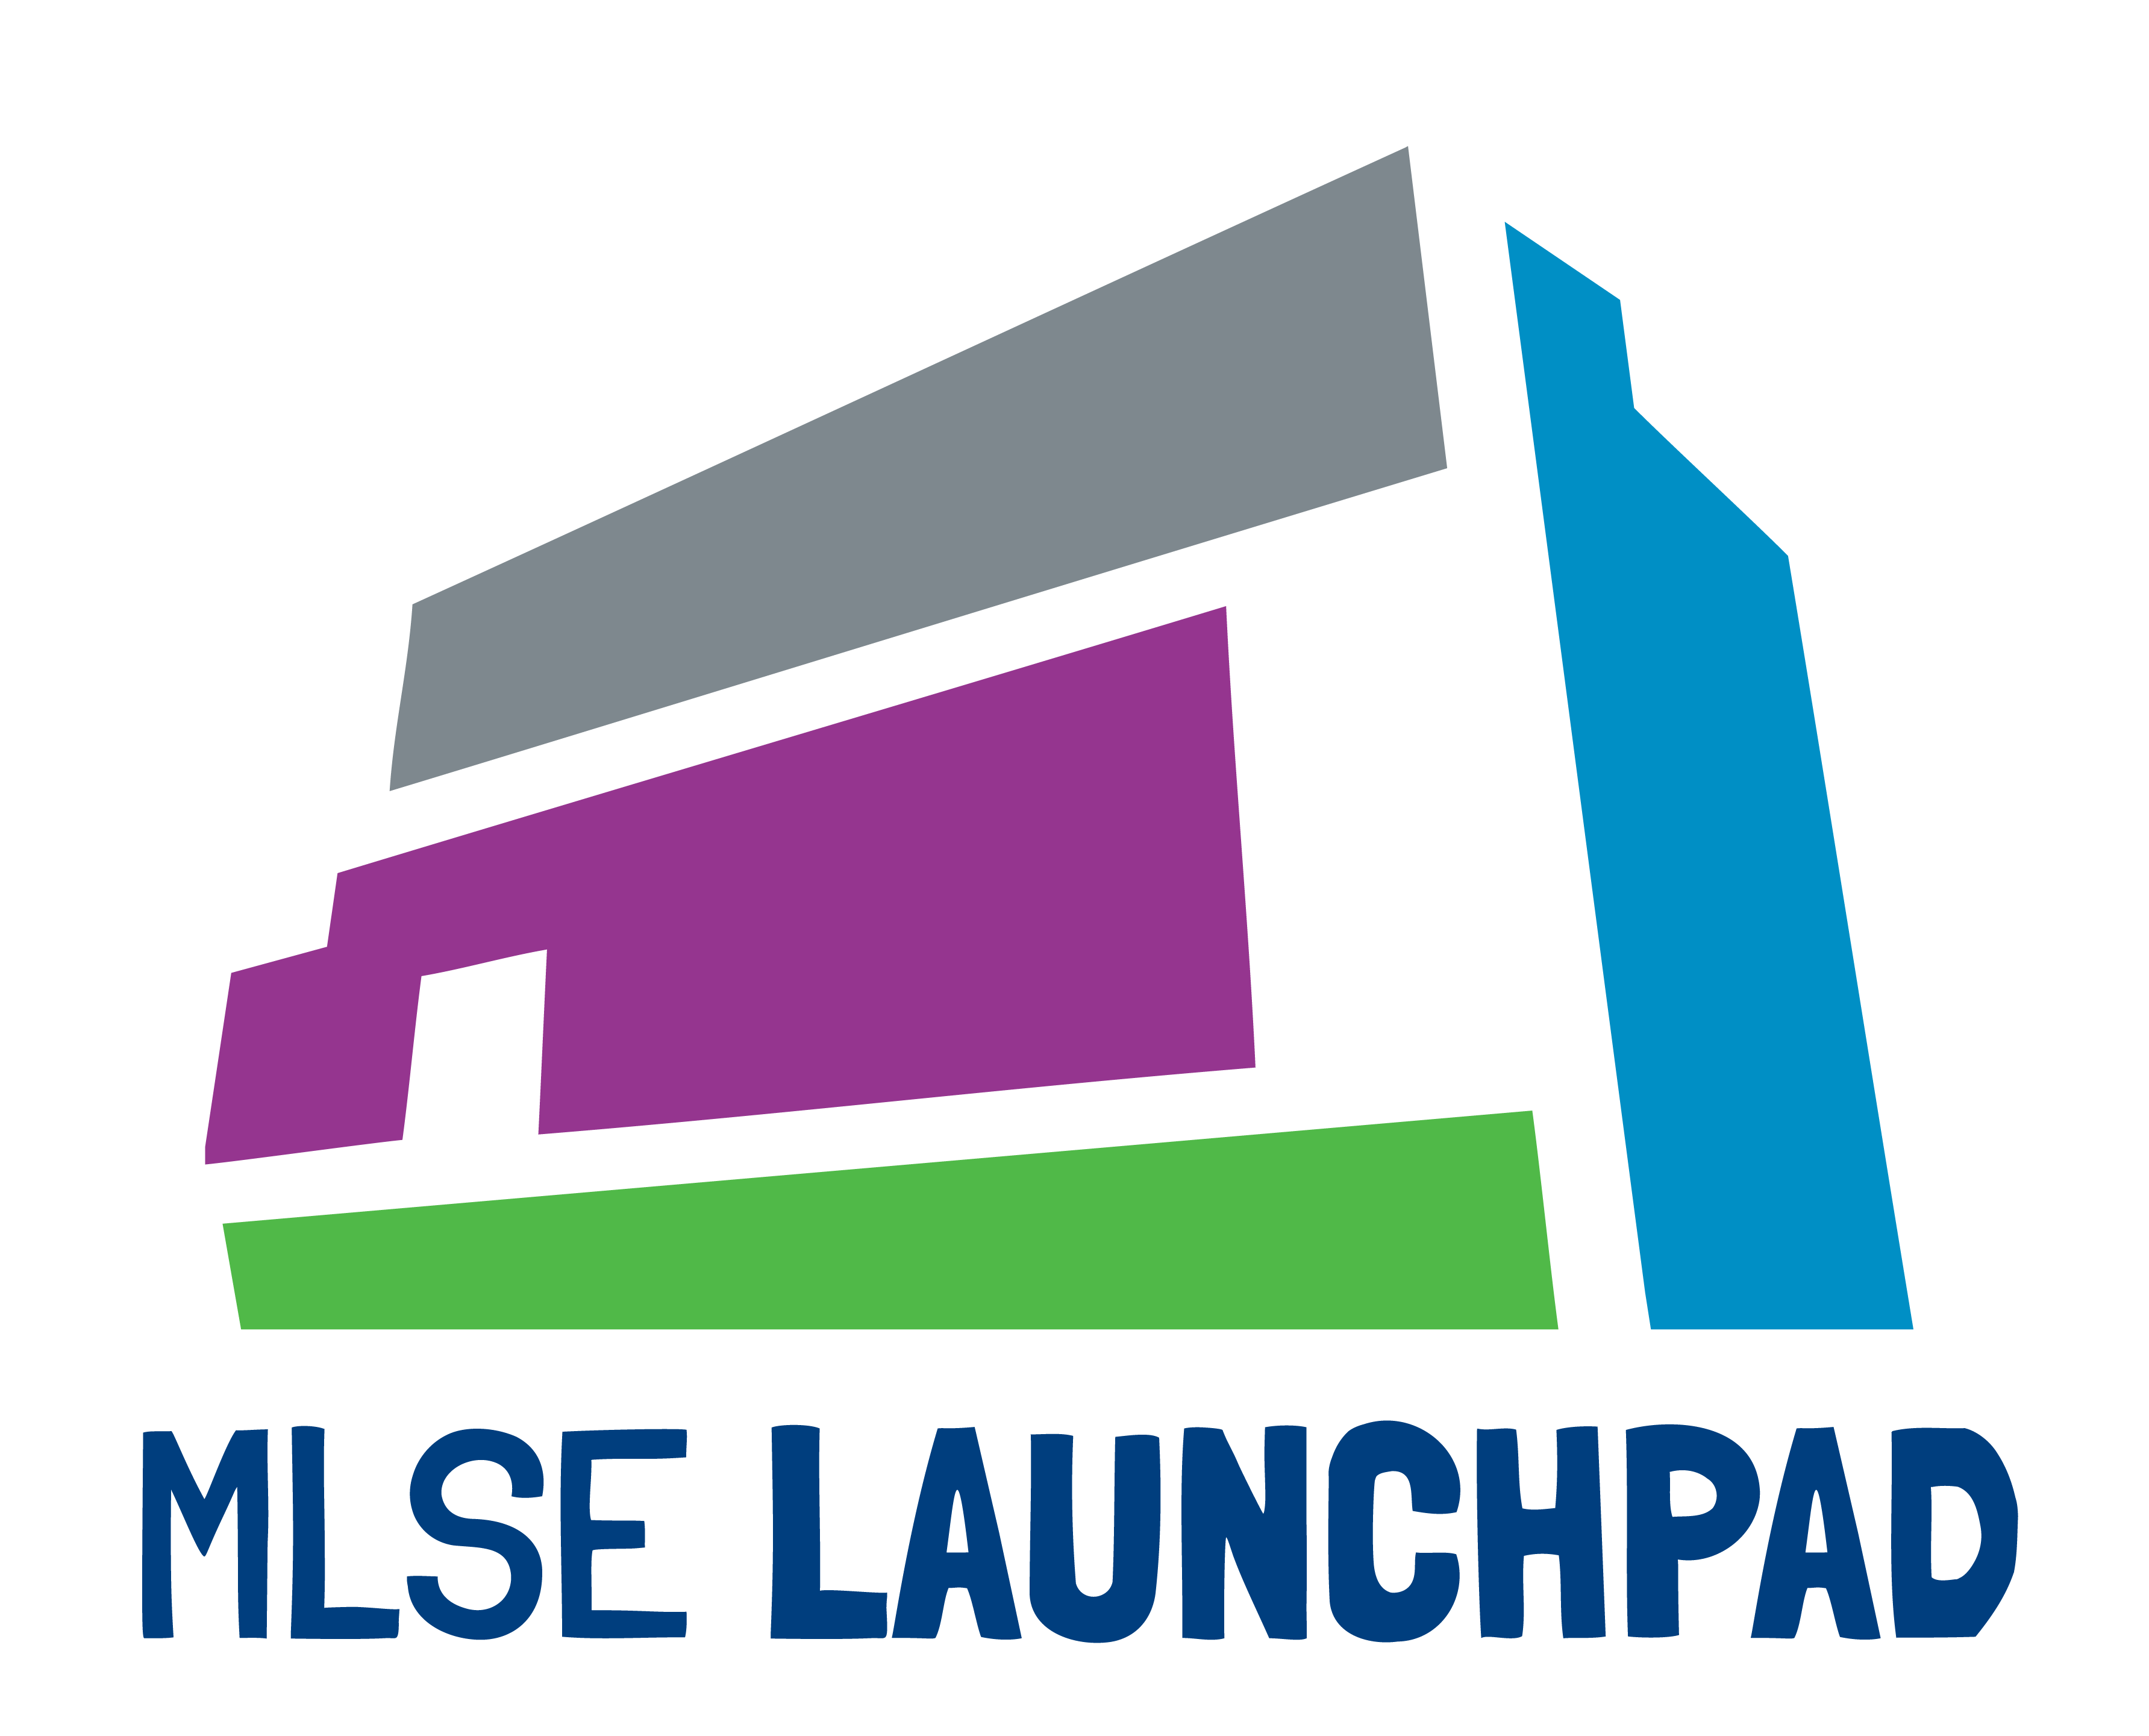 MLSE Launchpad